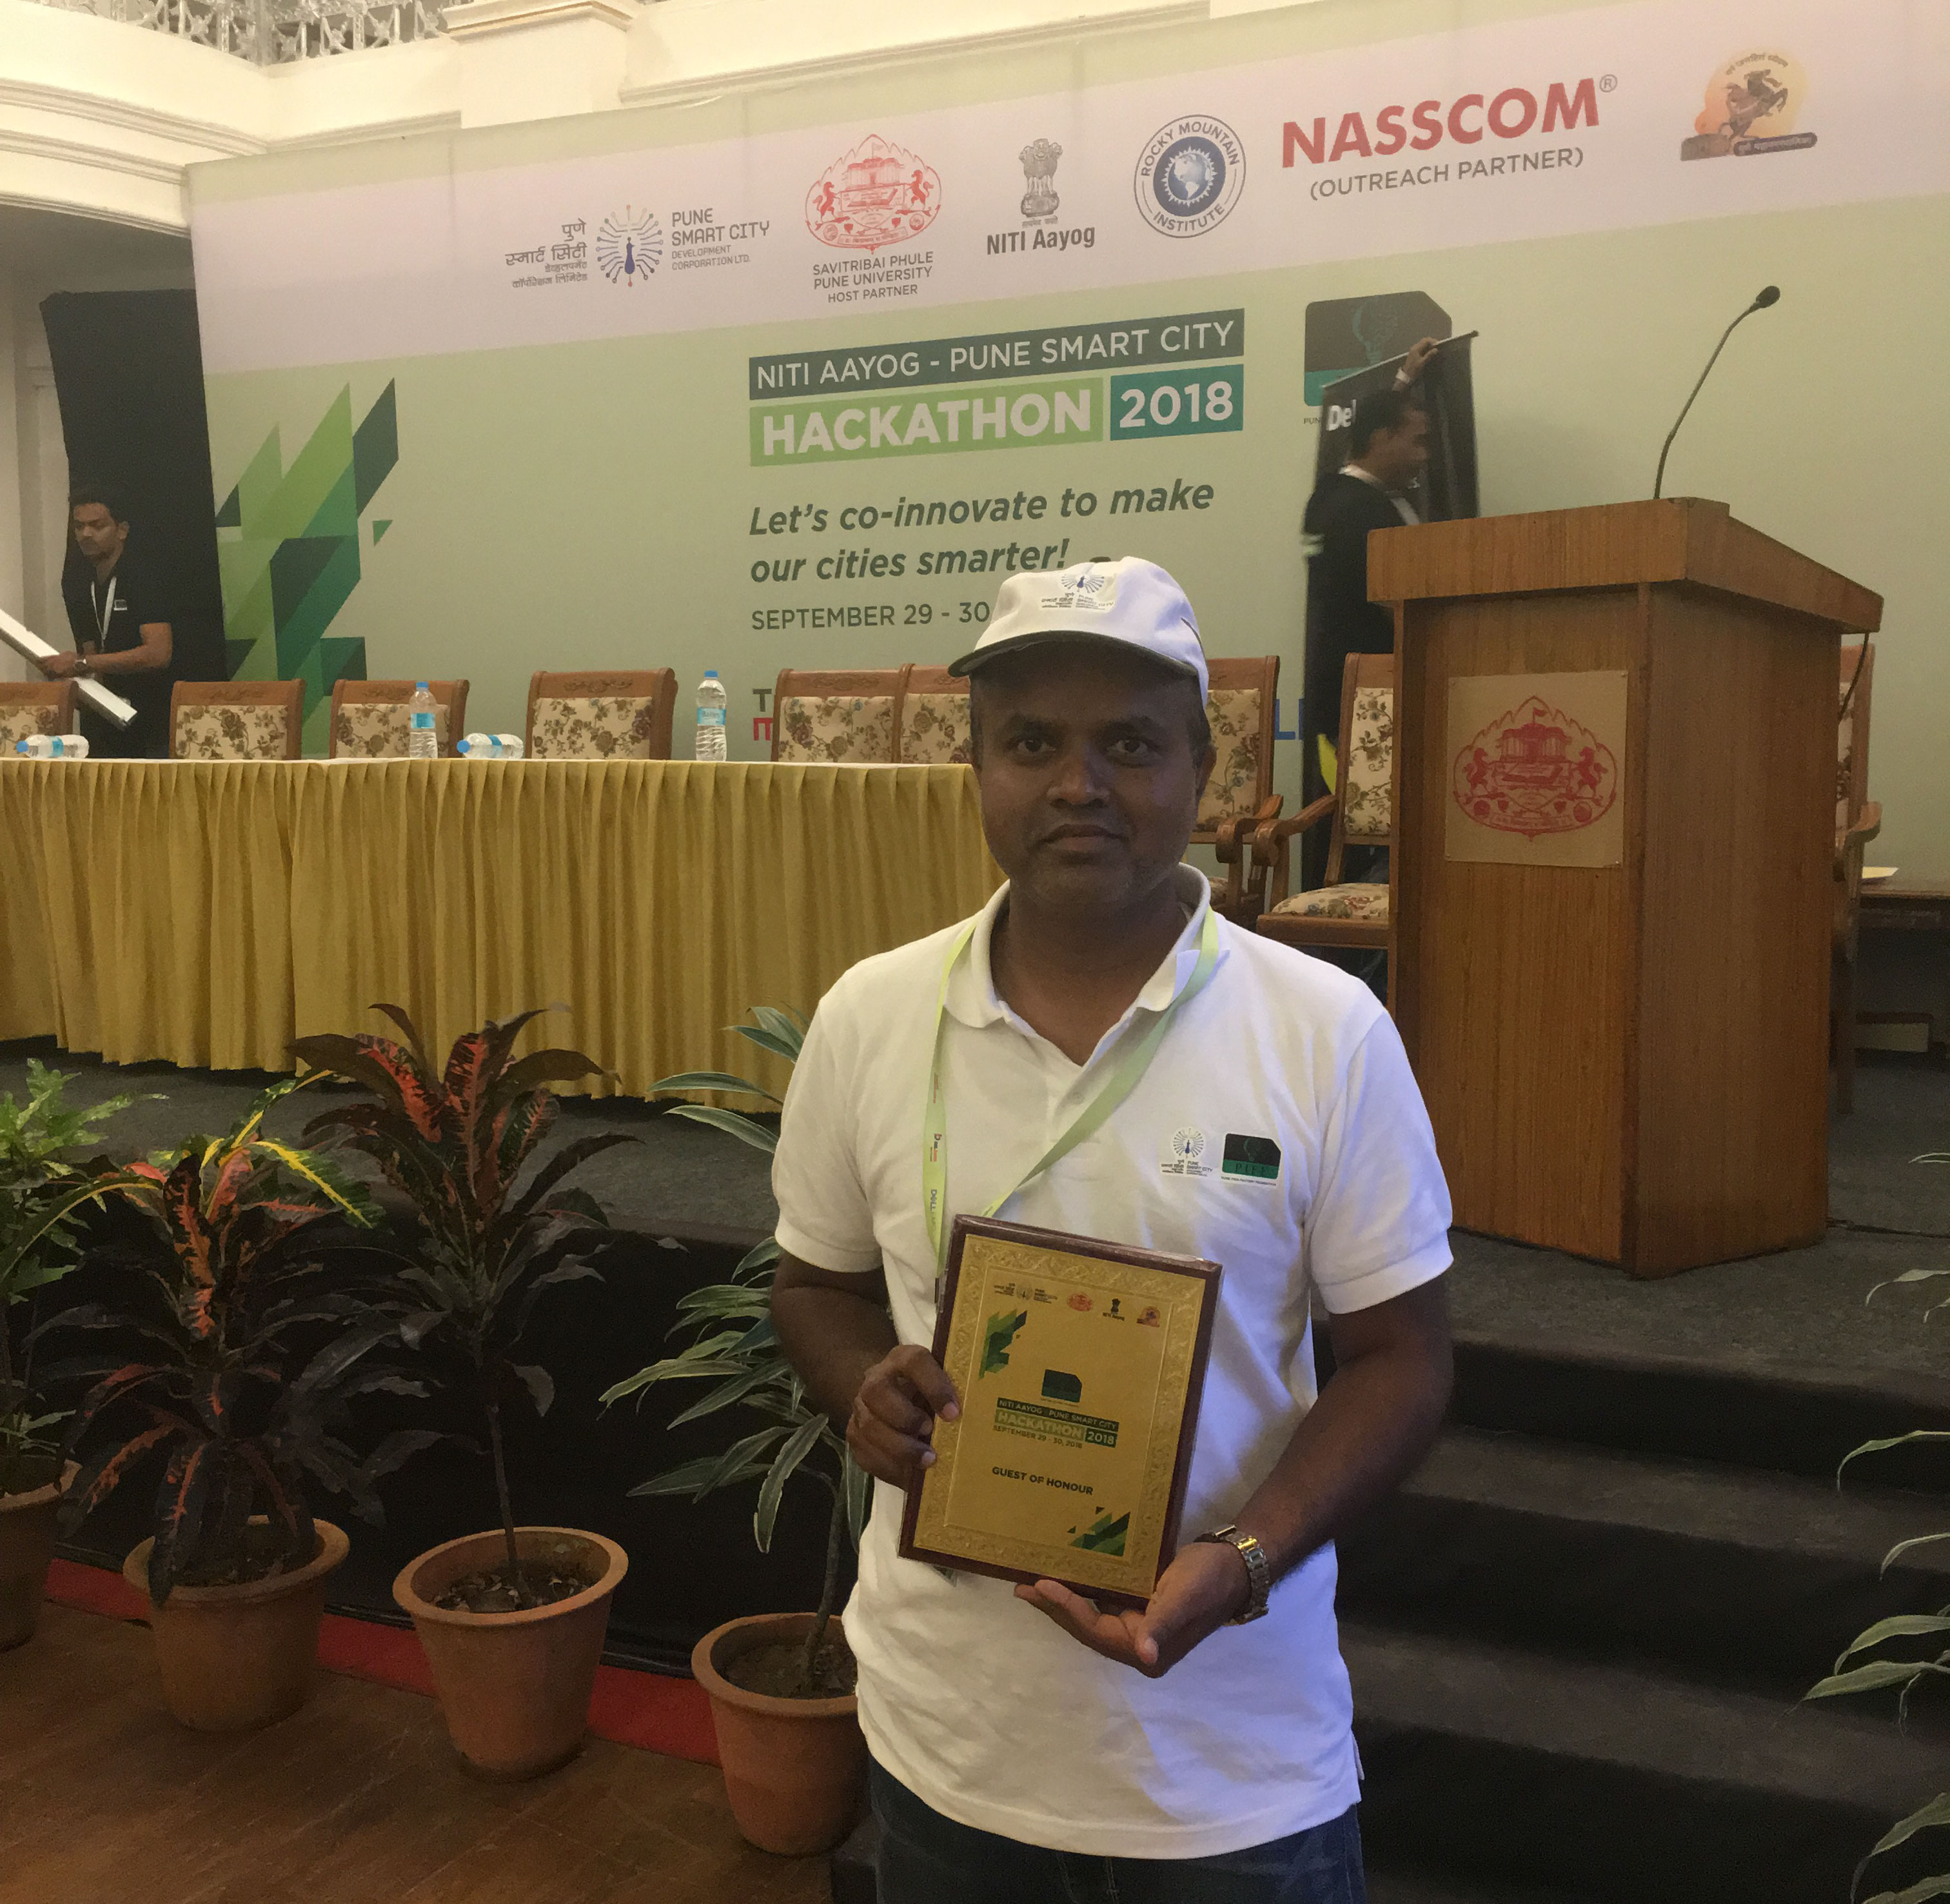 NITI AAYOG - Pune Smart City, Hackathon 2018 Award